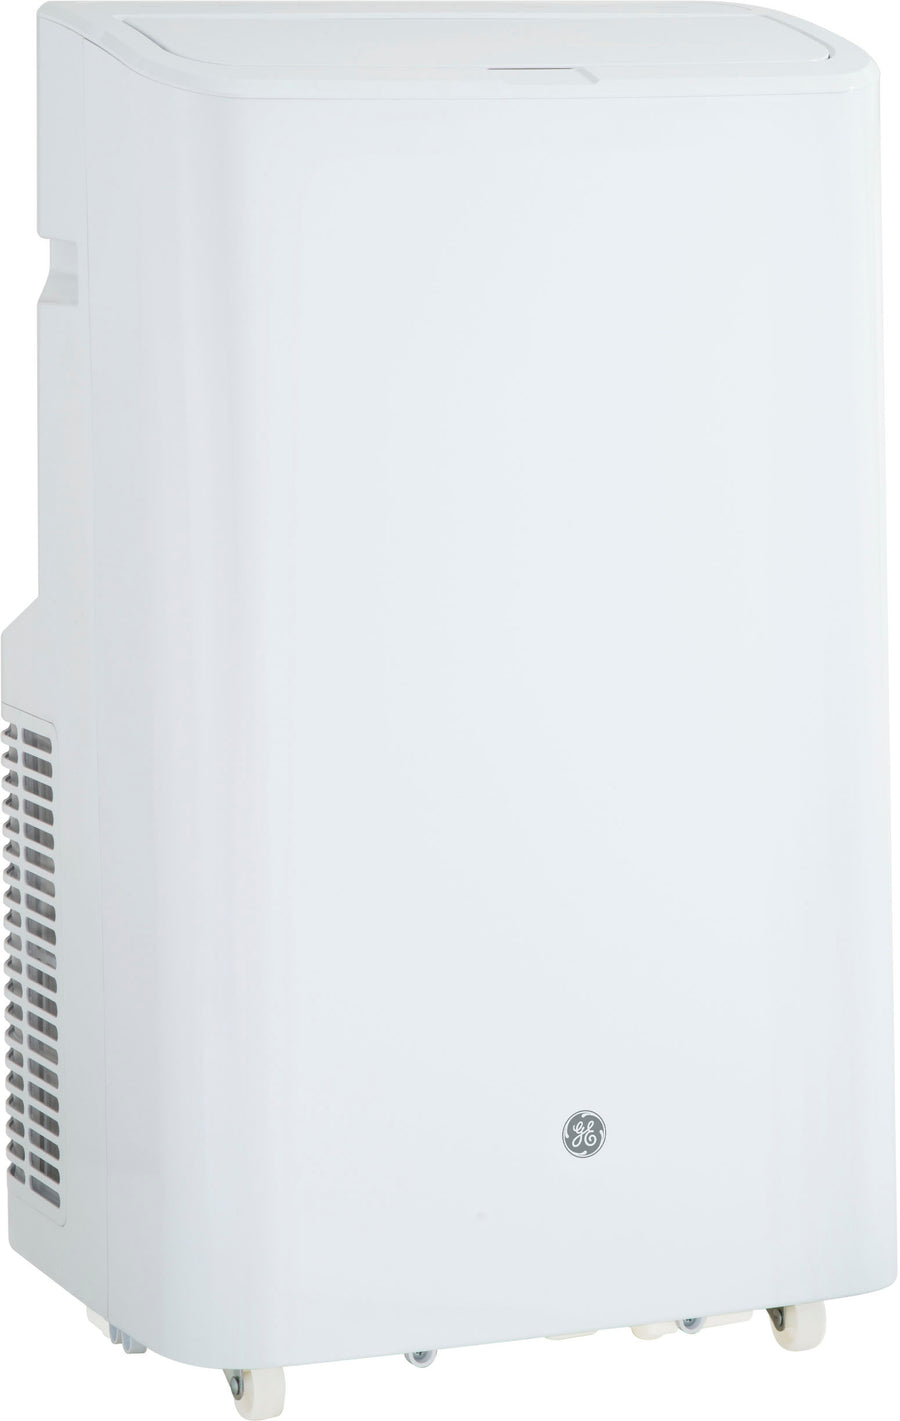 GE - 350 Sq. Ft. 8100 BTU Smart Portable Air Conditioner - White_0